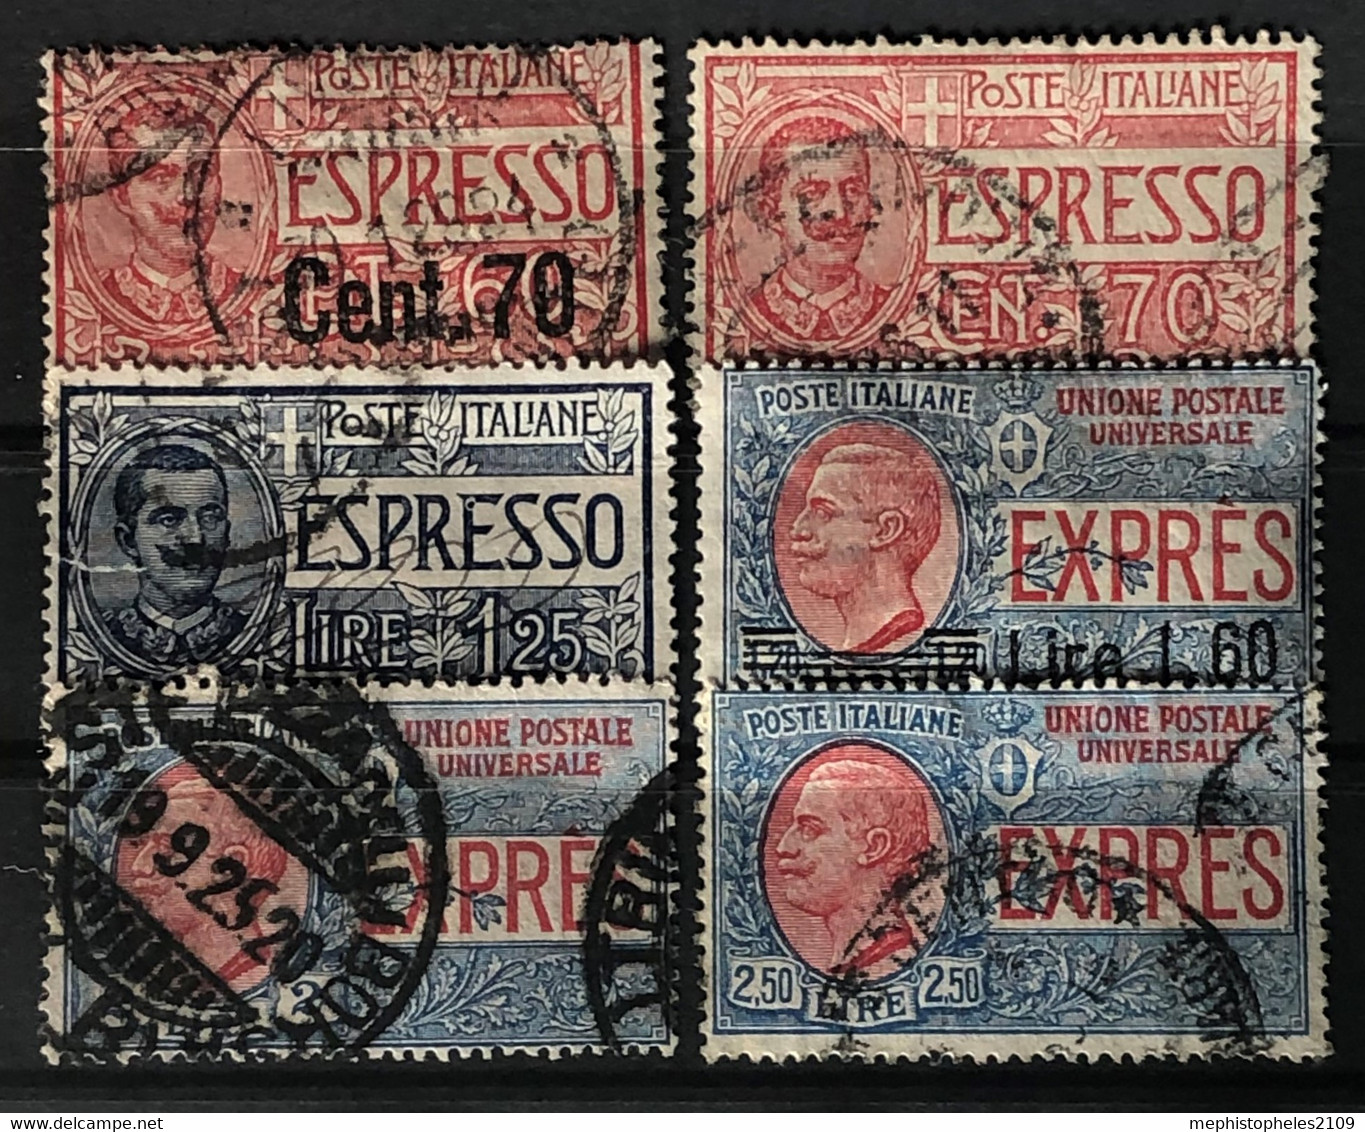 ITALY / ITALIA 1903-26 - Canceled - Sc# E4, E5, E7, E8, E12, E13 - Express Mail - Posta Espresso